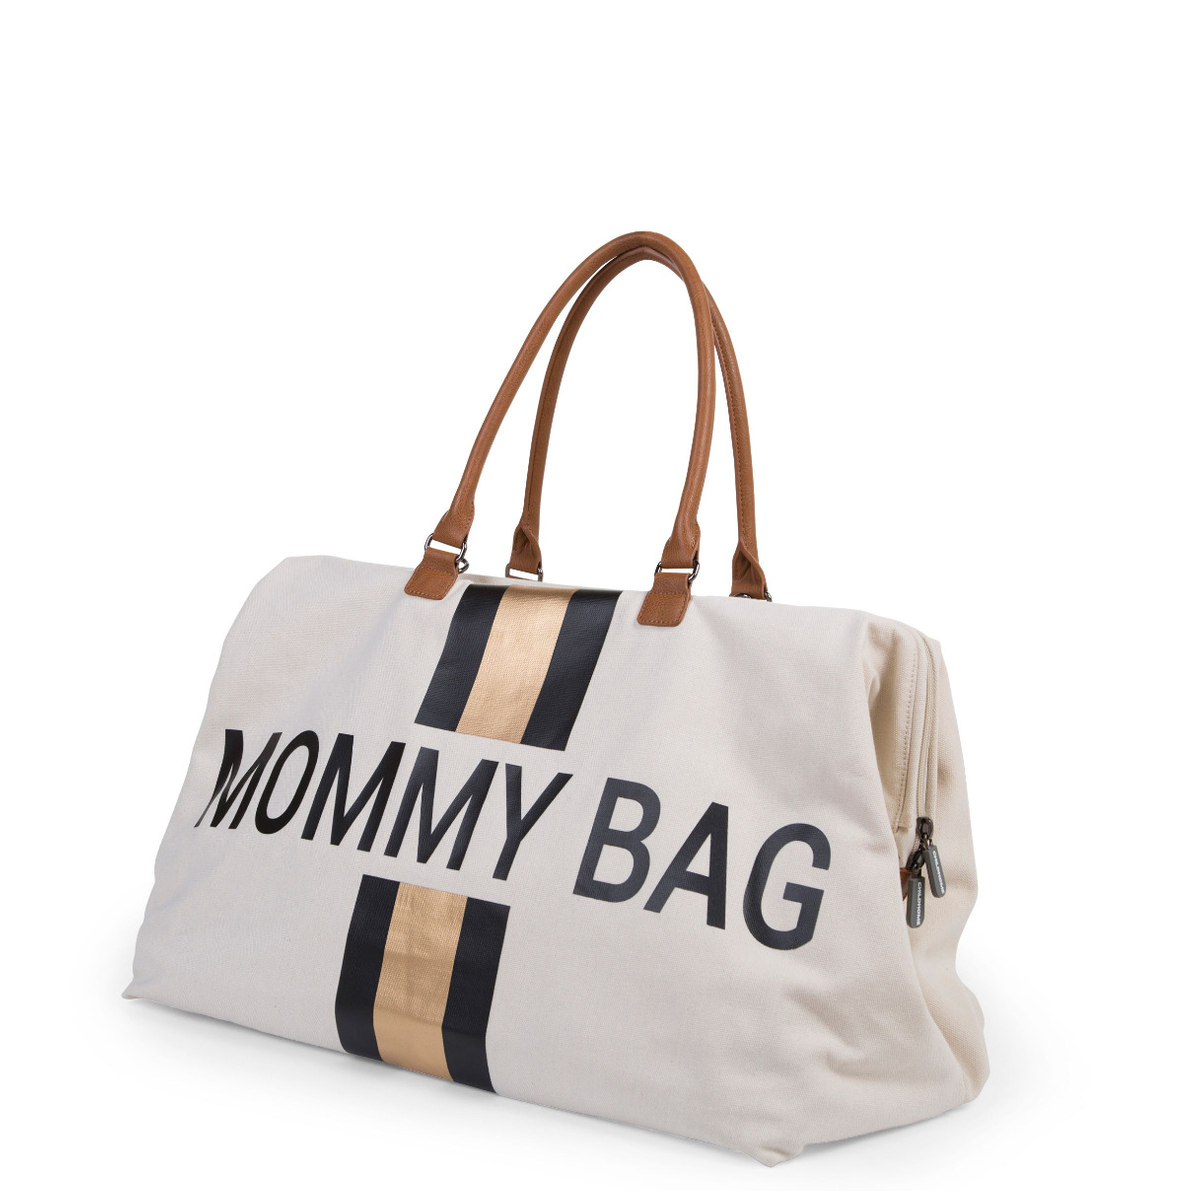 Childhome Mommy Bag Verzorgingstas - Ecru Strepen Zwart/Goud